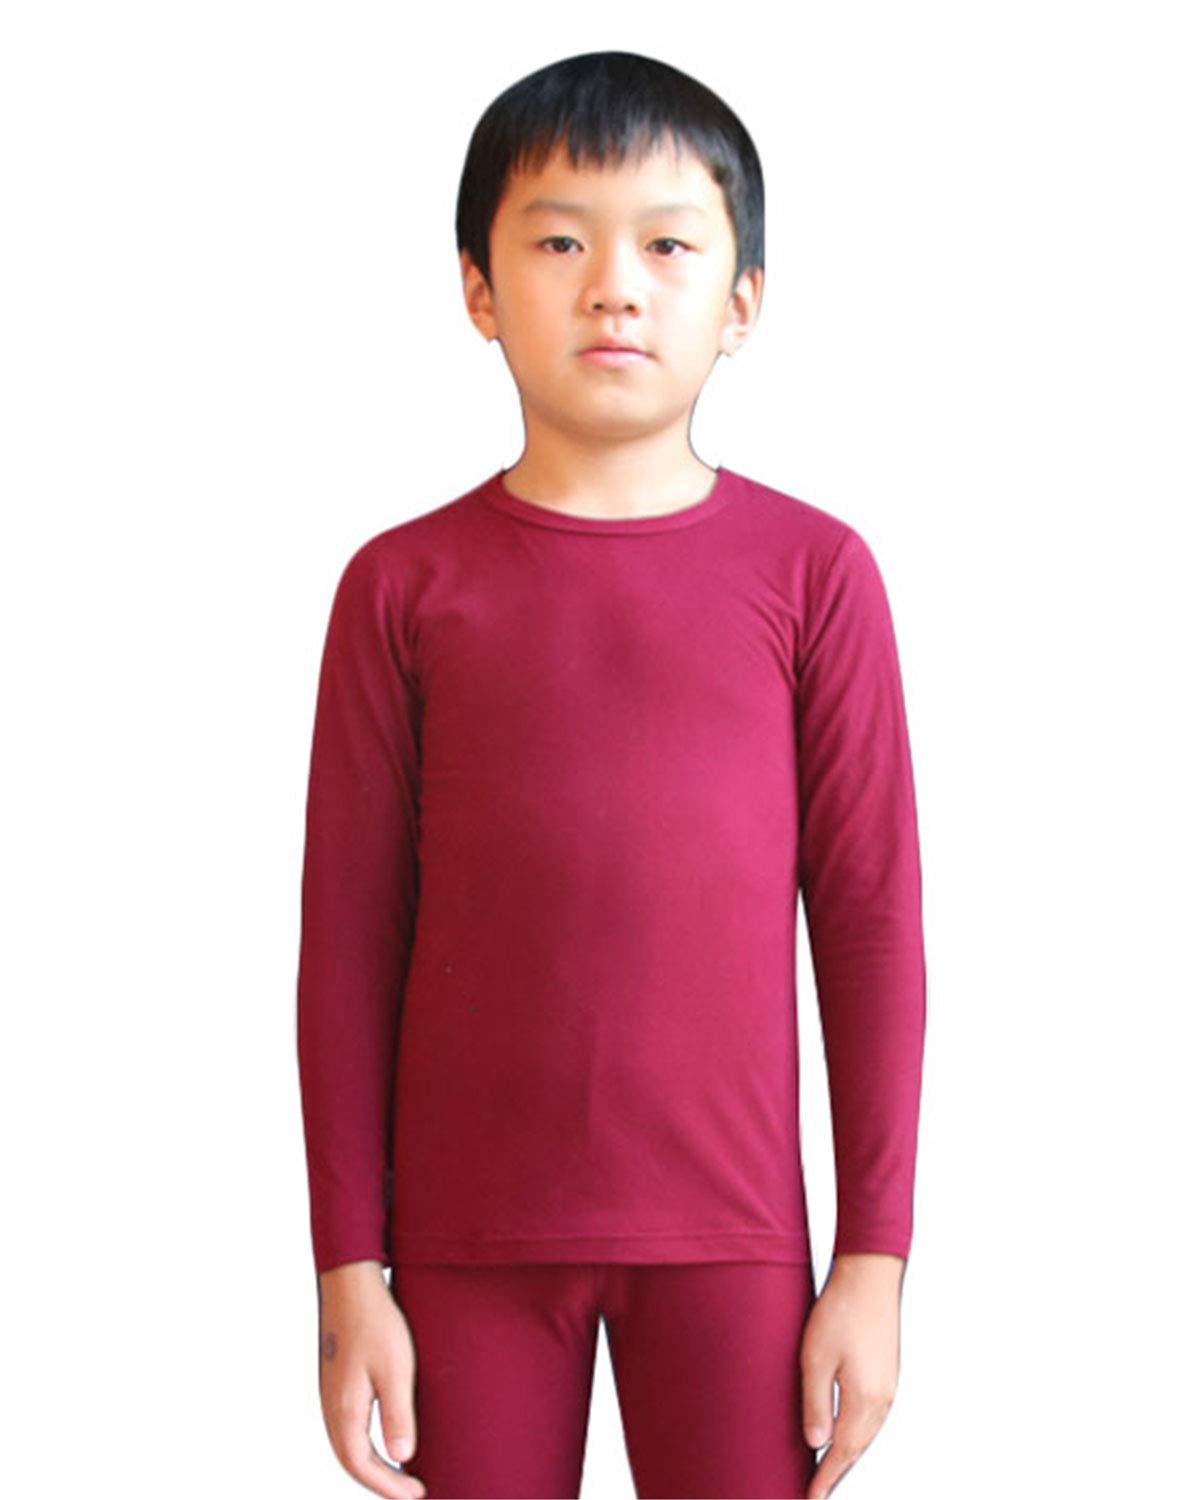 Boys Girls Thermal Compression Shirt Long Sleeve Fleece Lined Base Layer Set